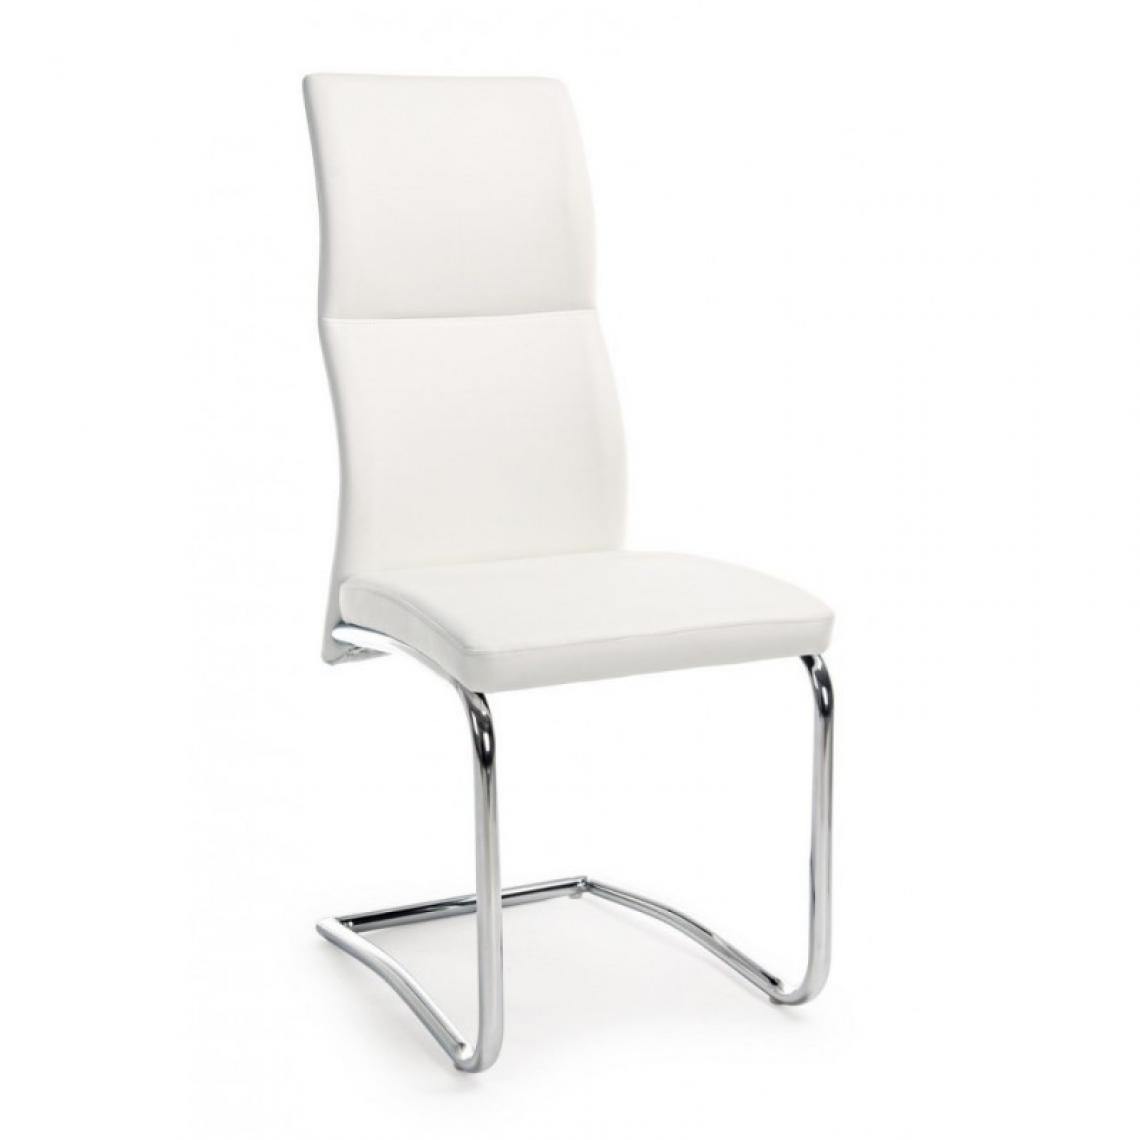 Webmarketpoint - Chaise design en éco-cuir blanc THELMA 44x58x h104 cm - Chaises